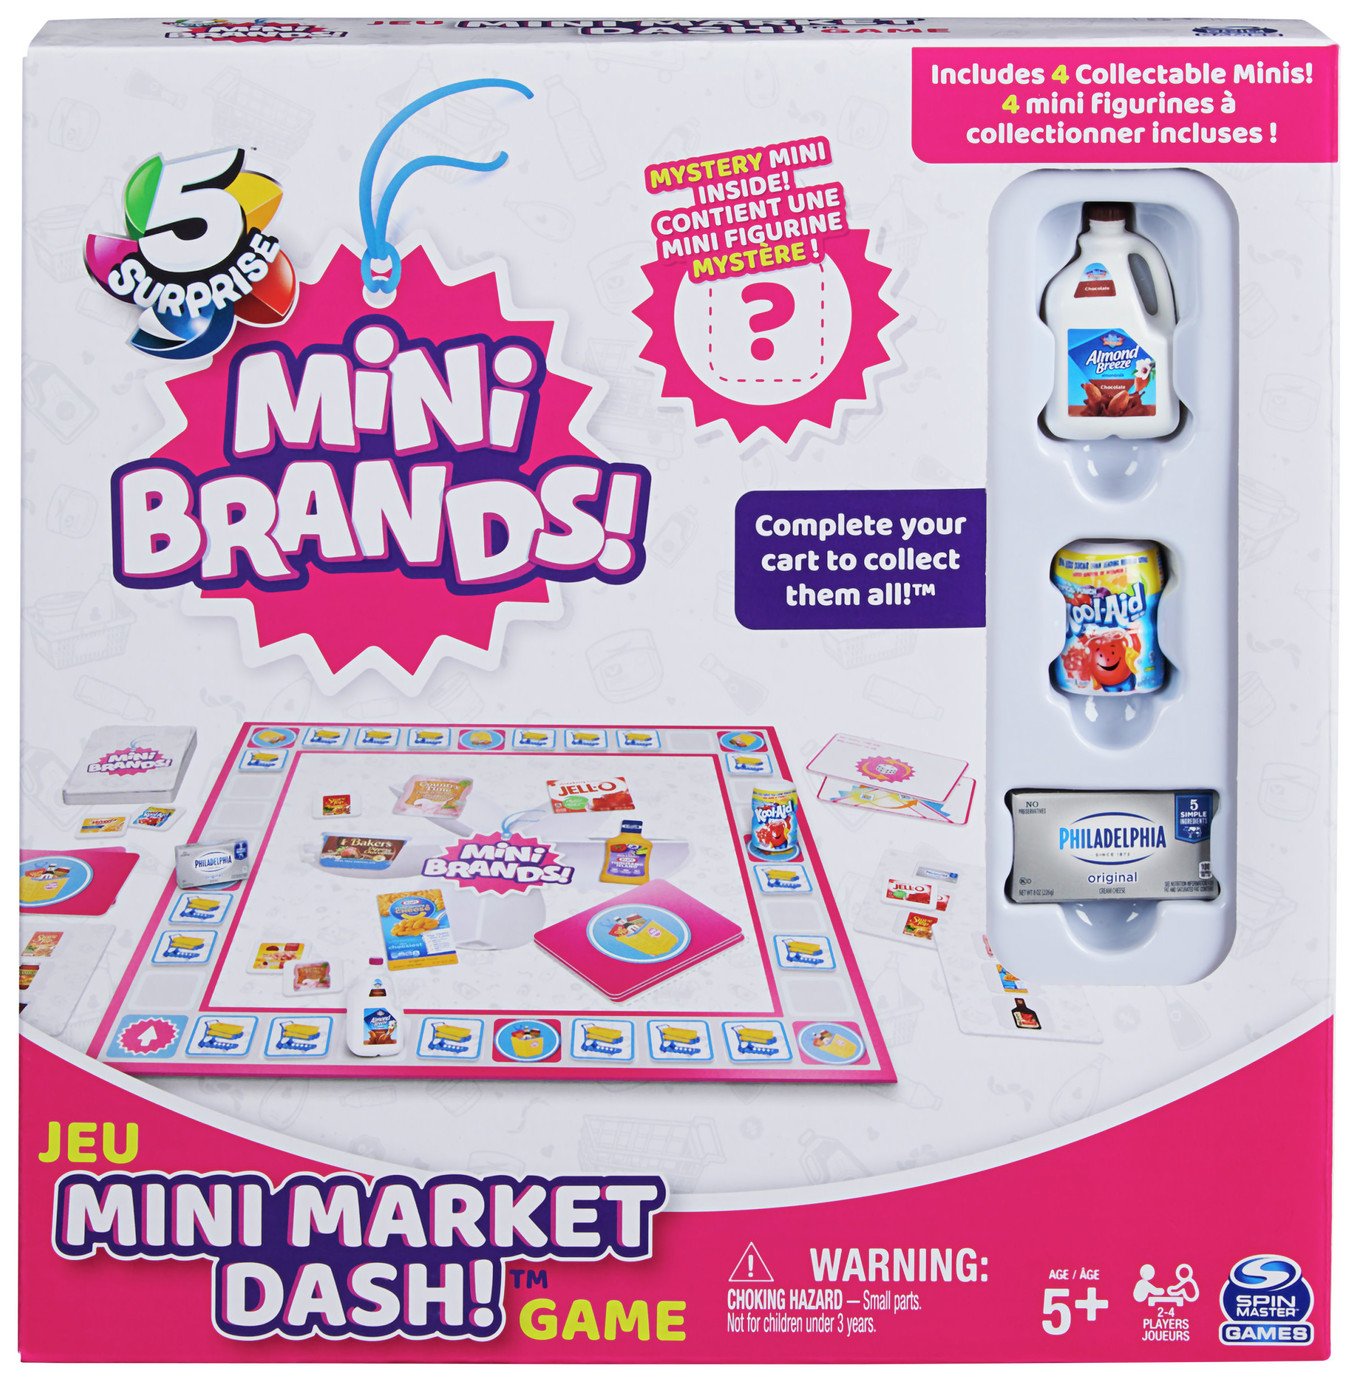 Mini Brands Mini Market Dash Shopping Board Game review